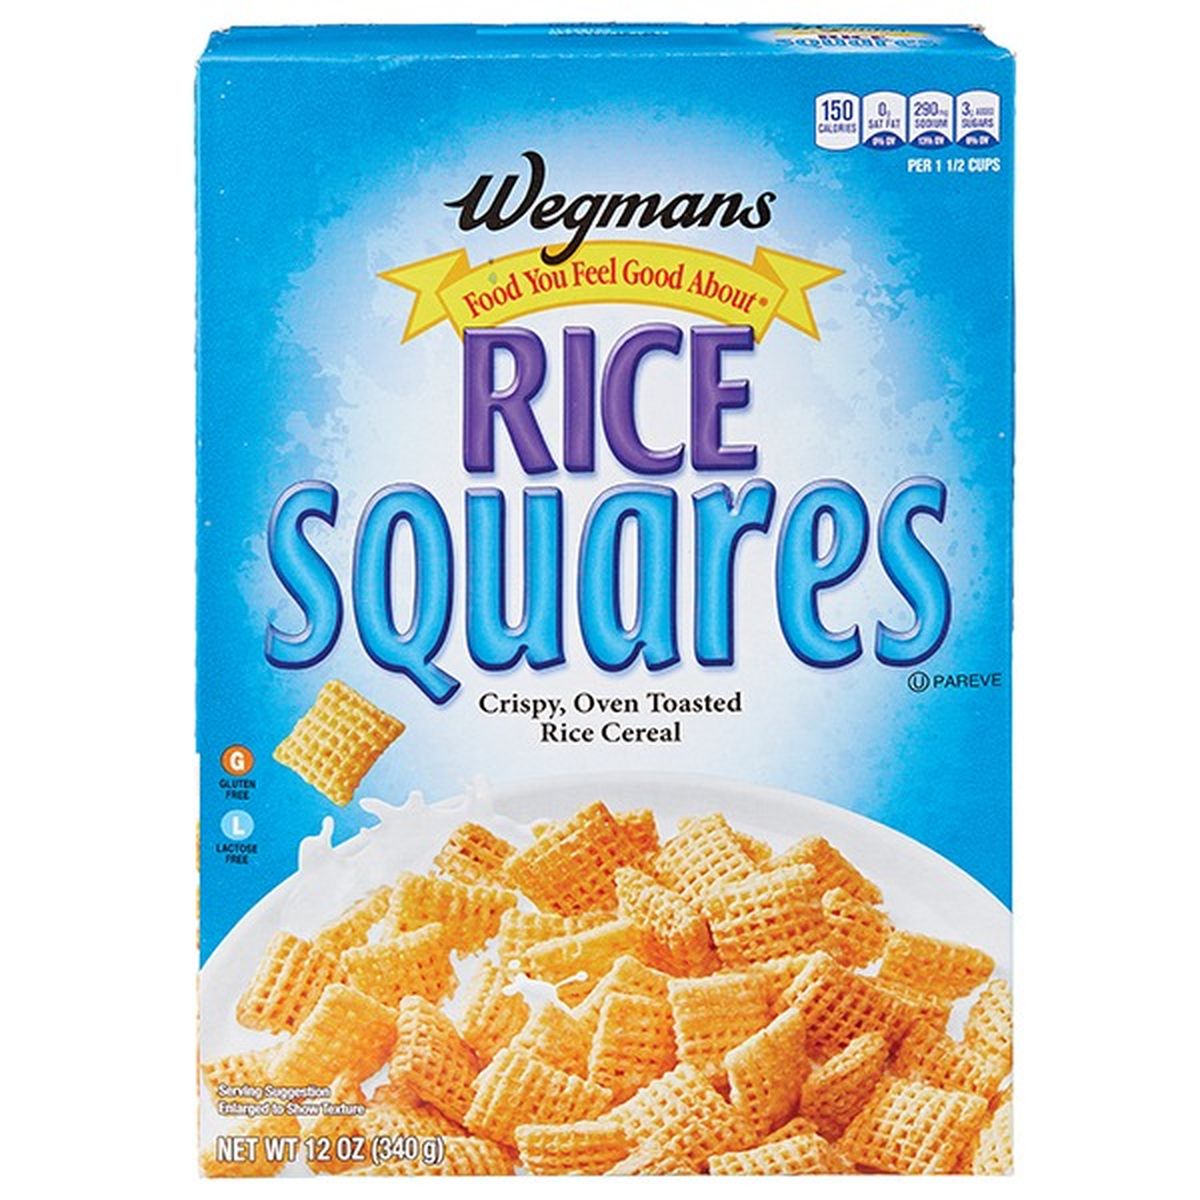 Calories in Wegmans Rice Squares Cereal